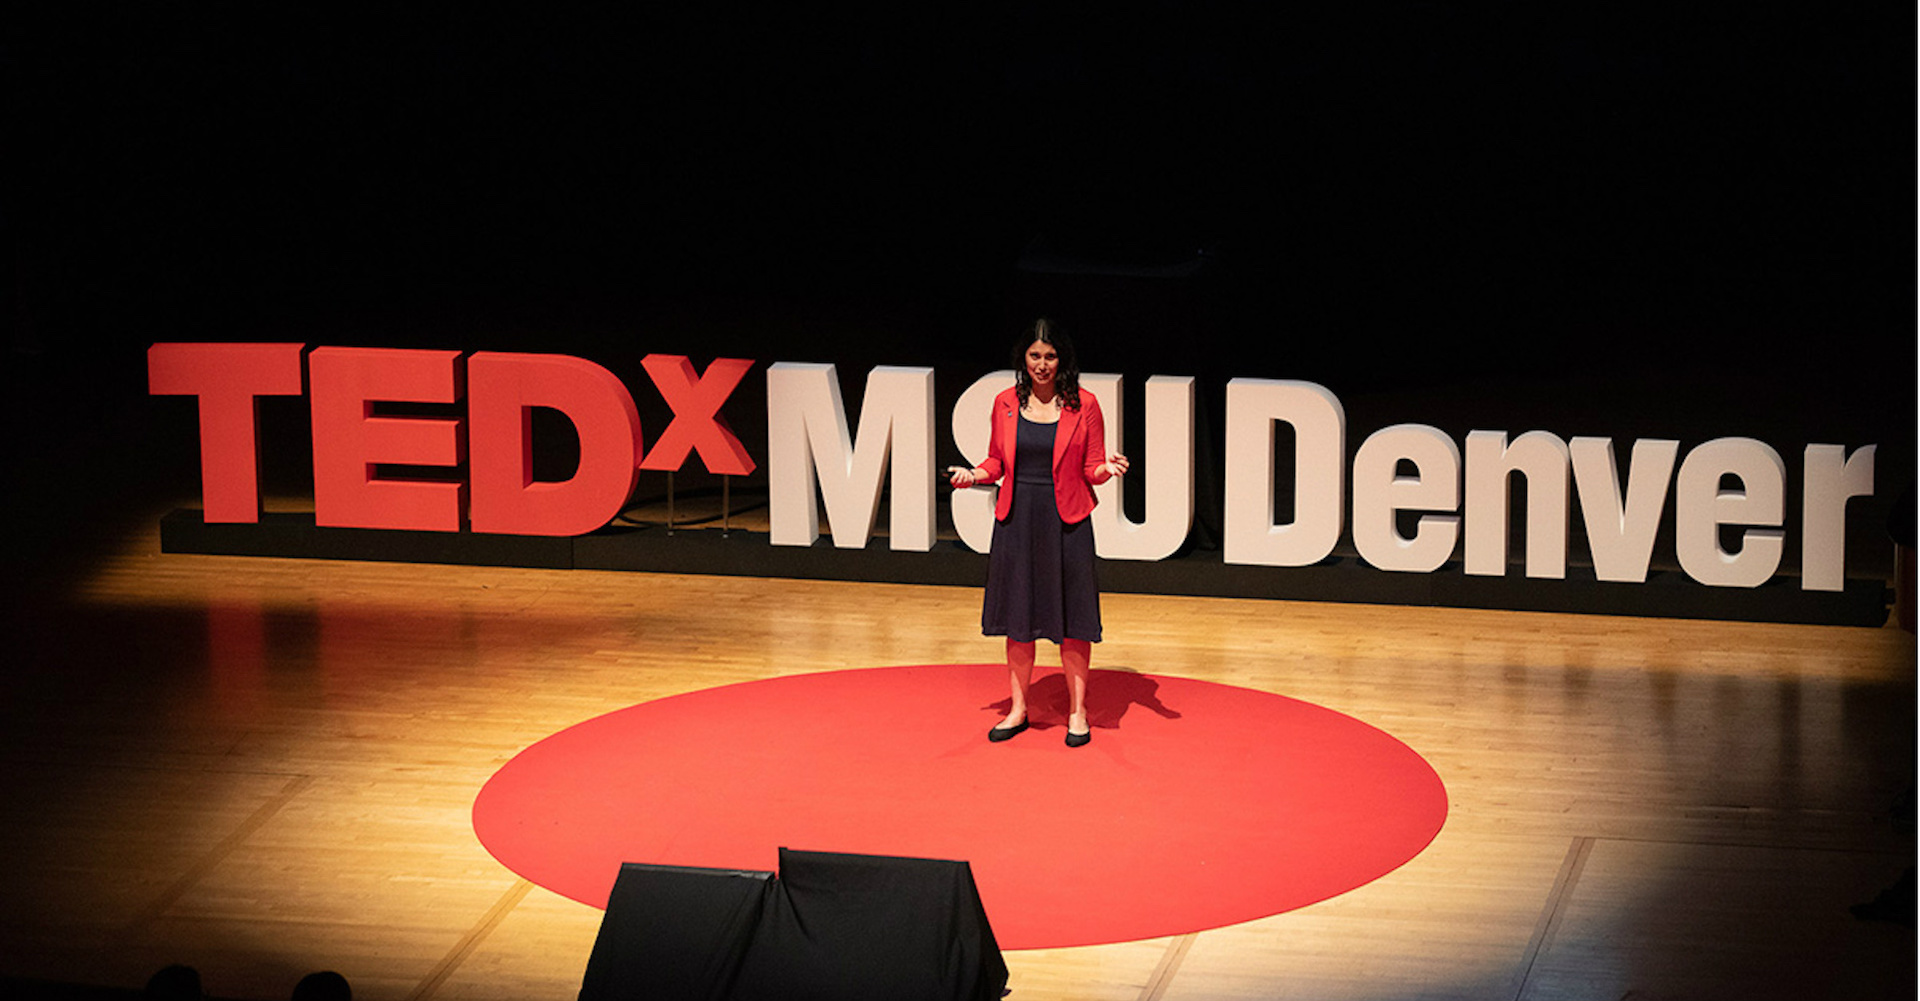 TEDx MSU Denver: Lasting learning